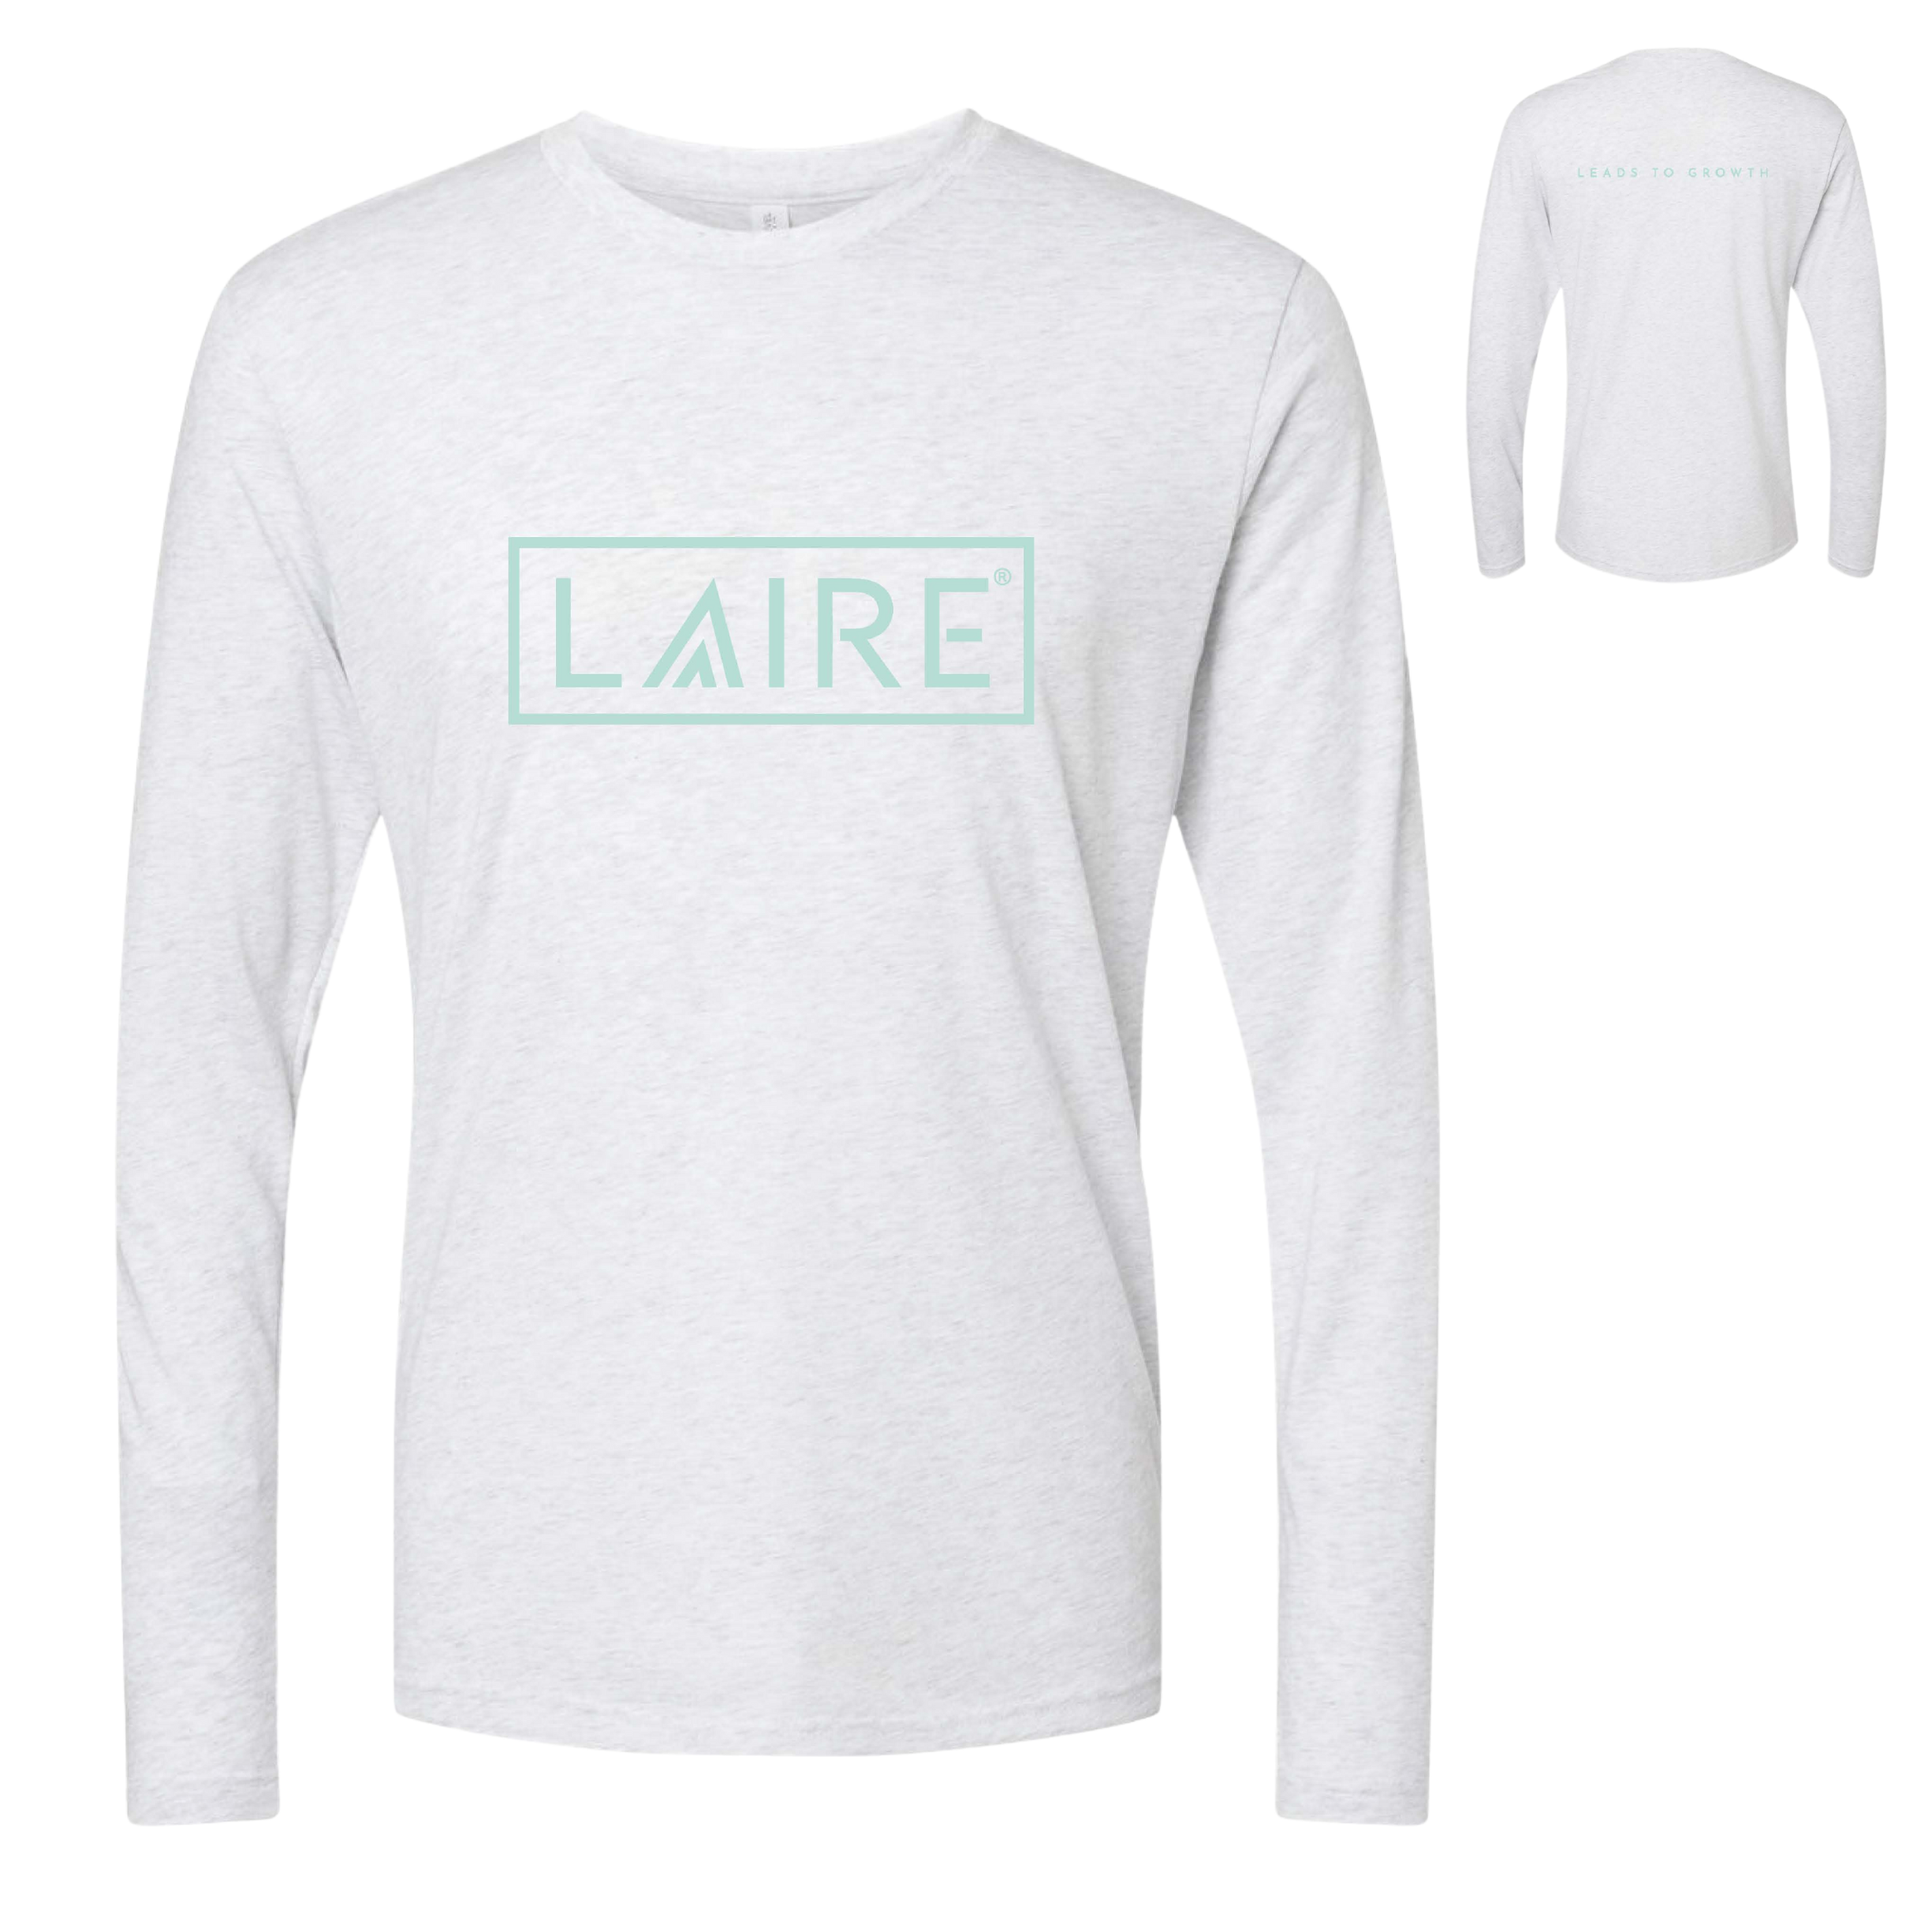 Super Soft Tri-Blend Unisex T-Shirt - White Long Sleeve